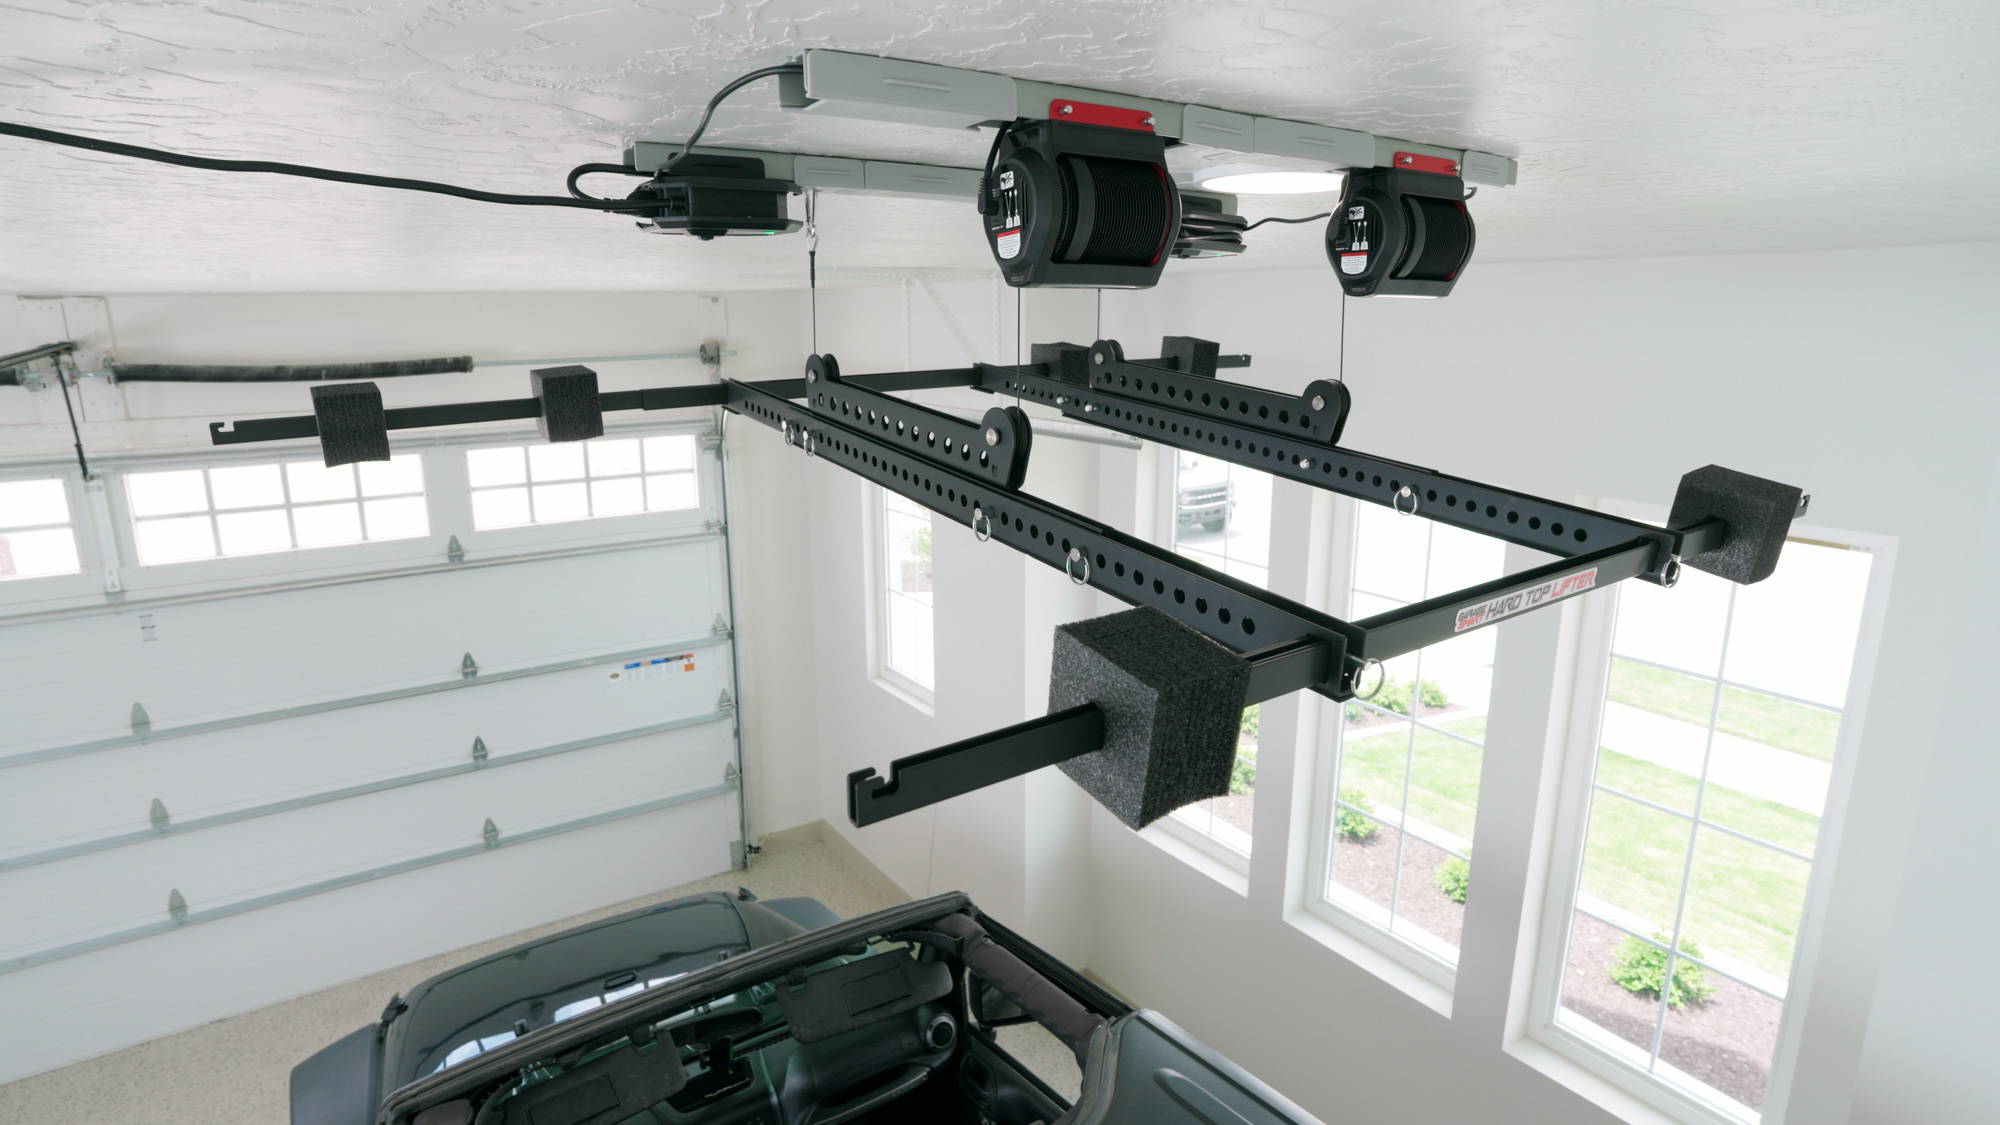 SmarterHome Hard Top Lifter - Wrangler Garage Storage Solution